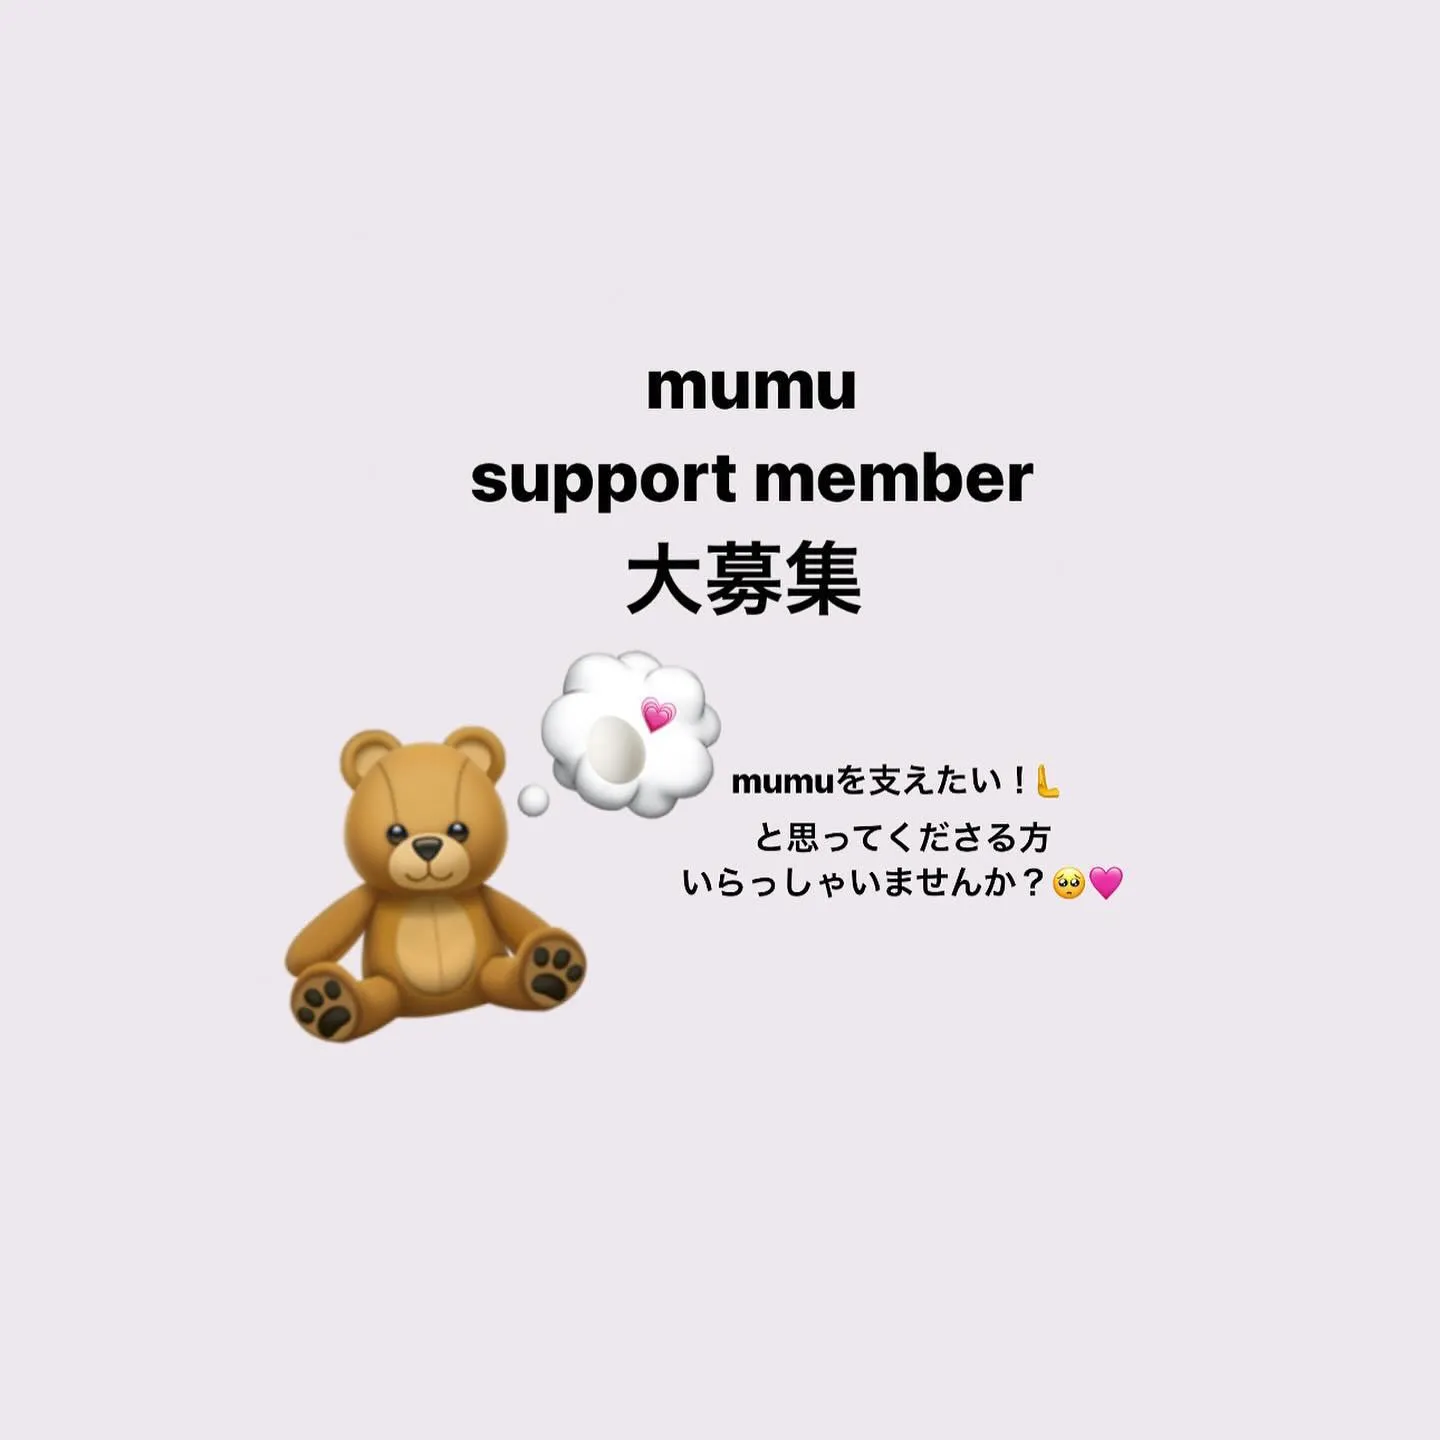 support member 大募集😌💫